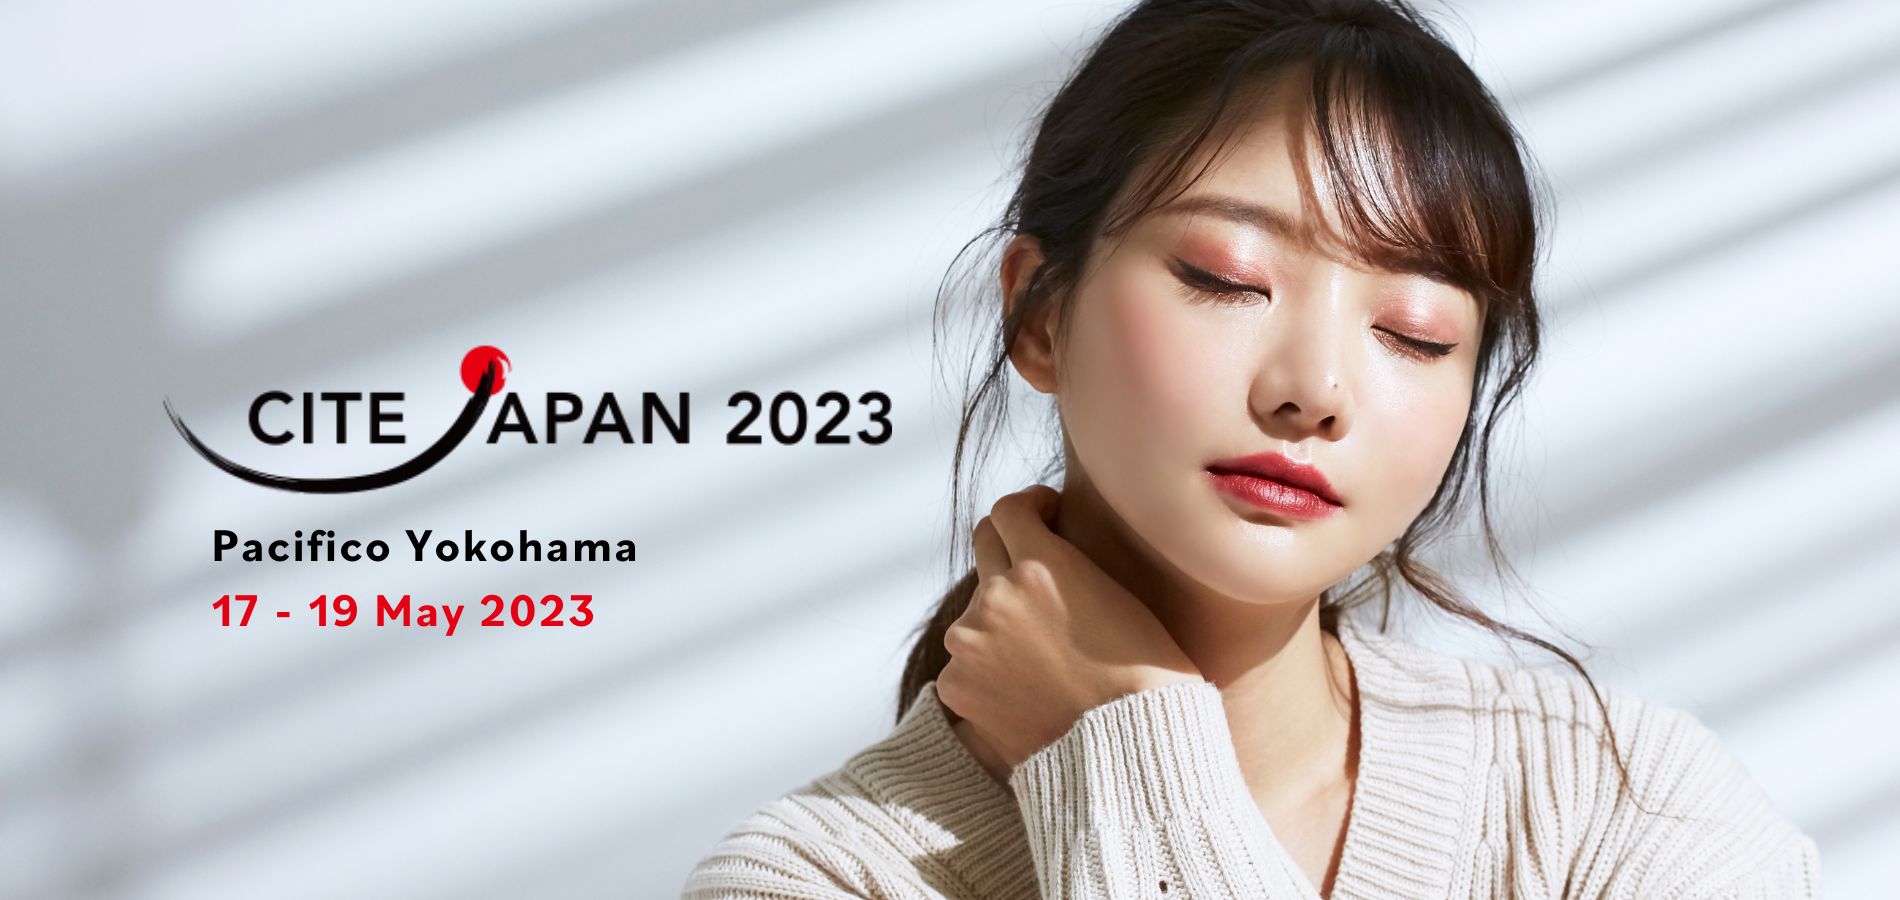 Strona internetowa CITE Japonia 2023 Featured Image